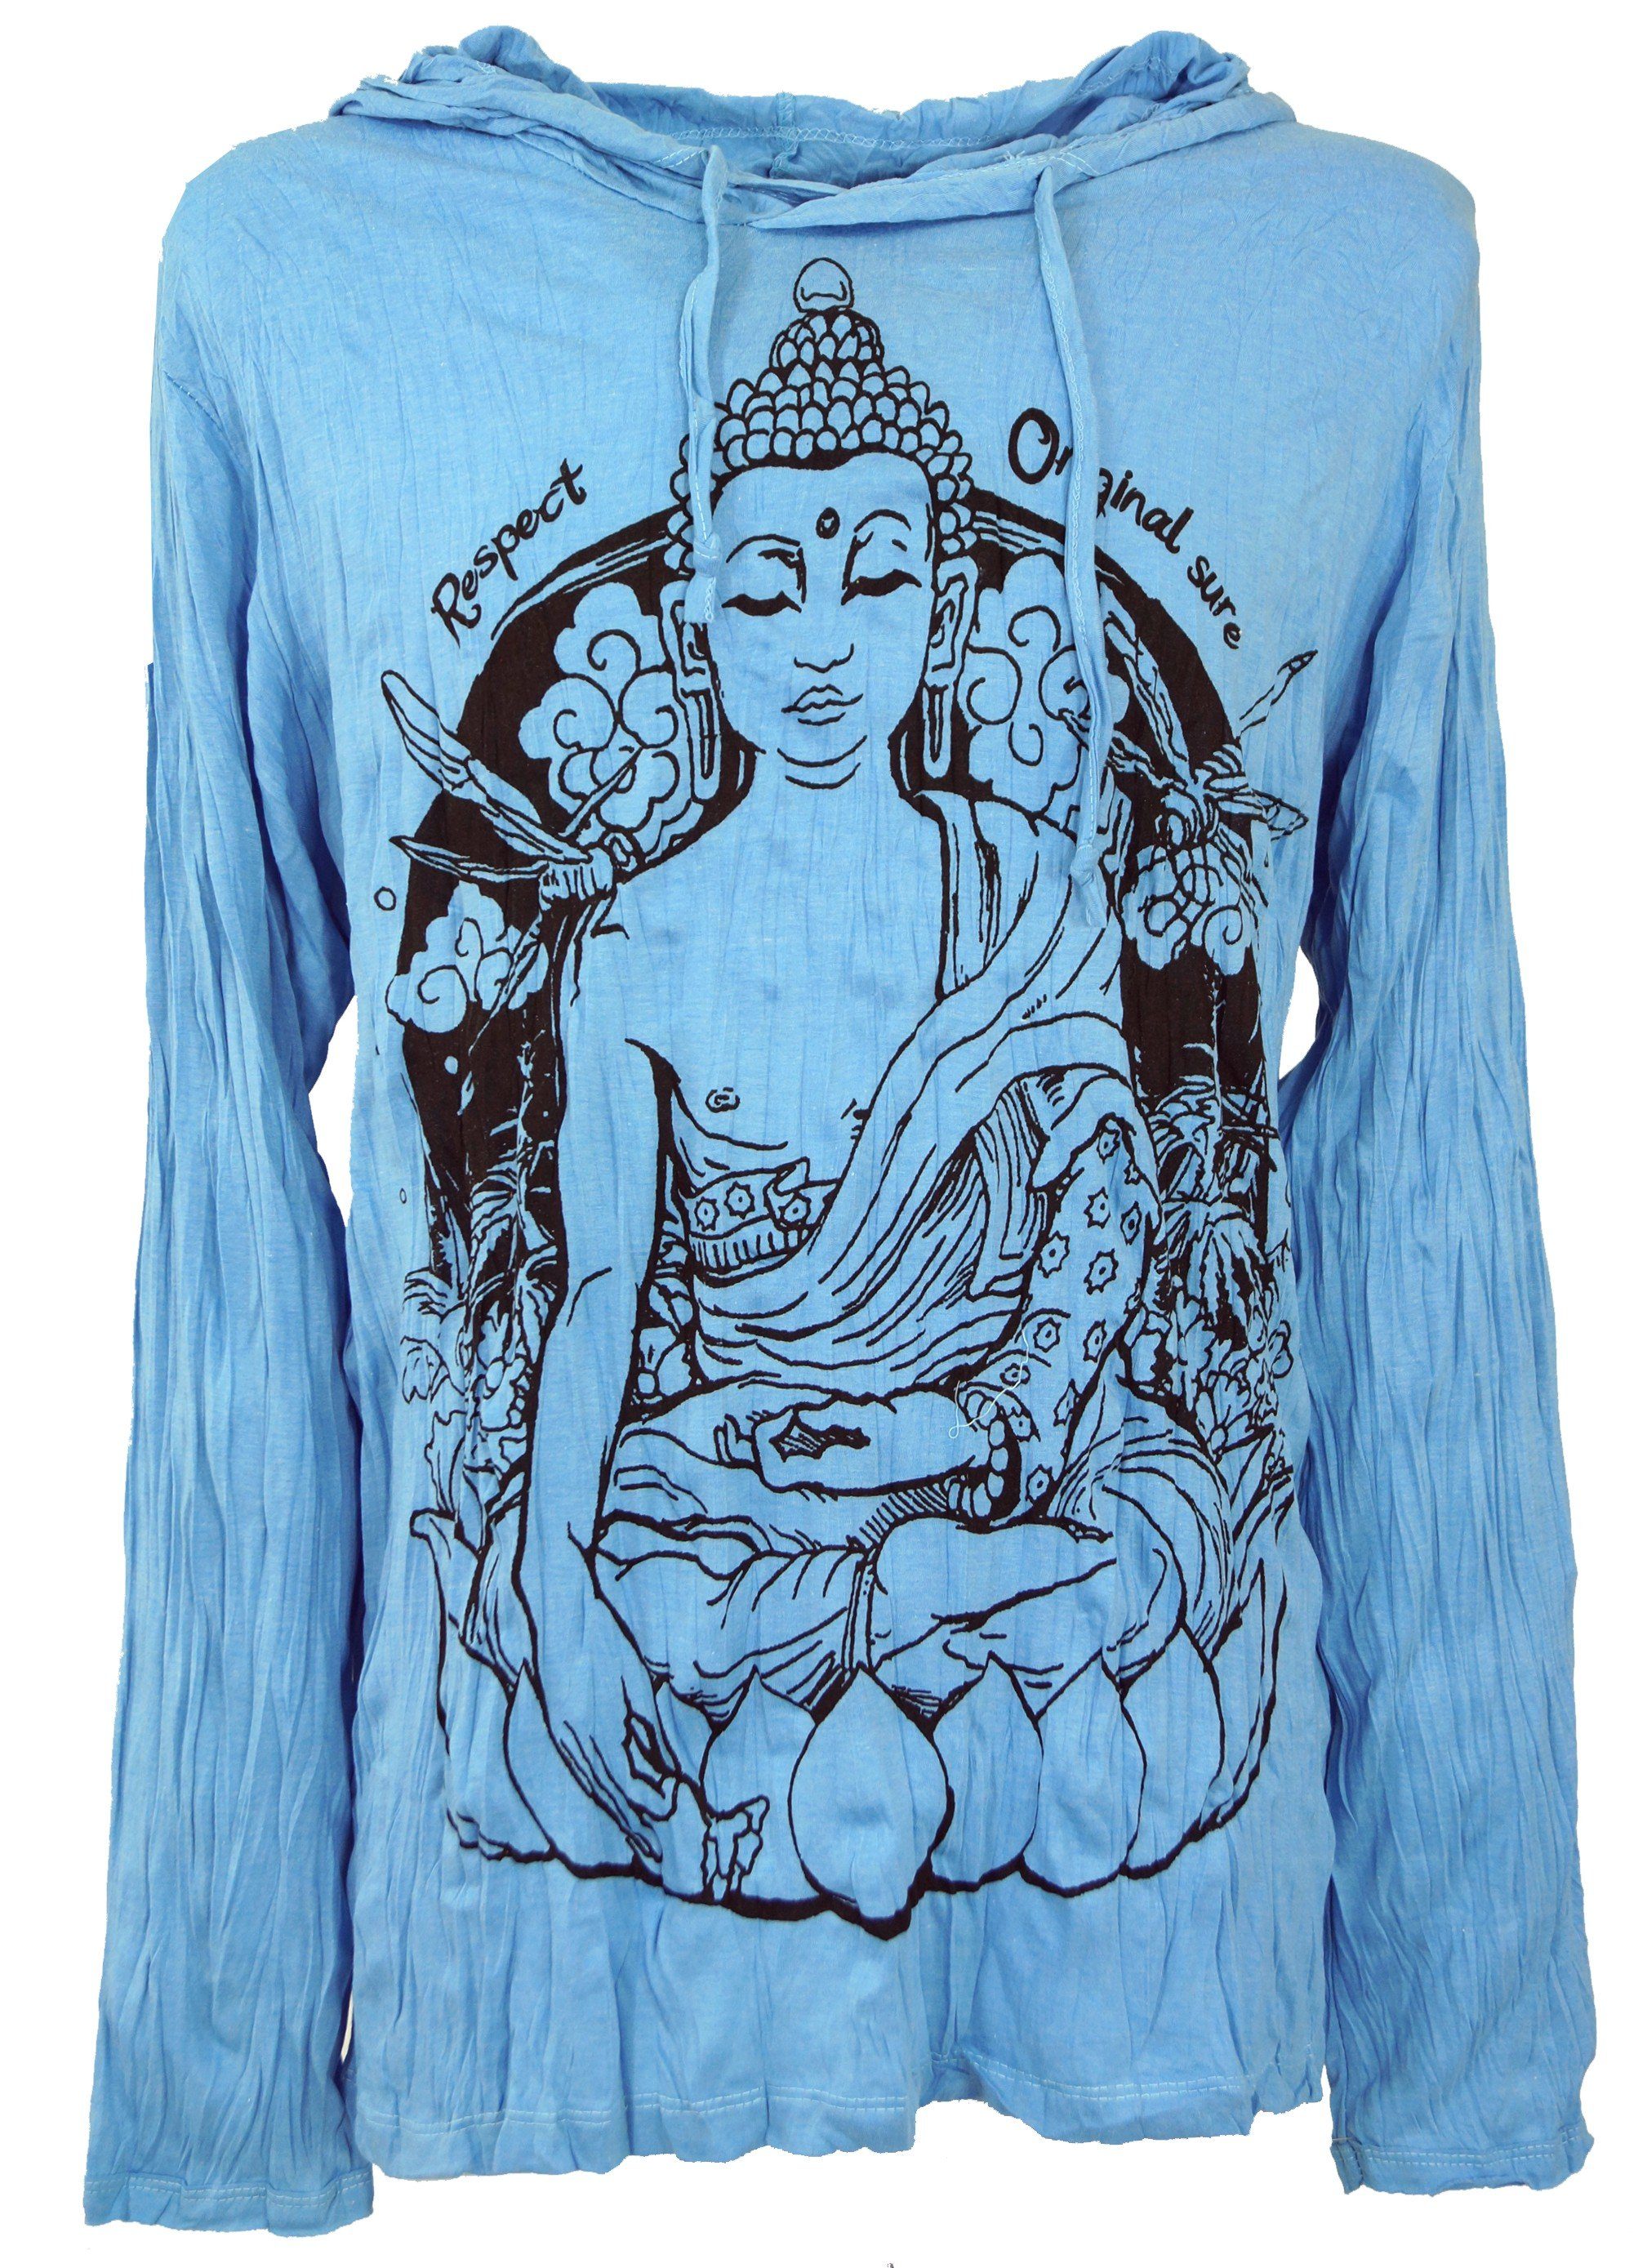 Guru-Shop T-Shirt Sure Langarmshirt, Kapuzenshirt Goa Meditation.. alternative Bekleidung Festival, hellblau Style